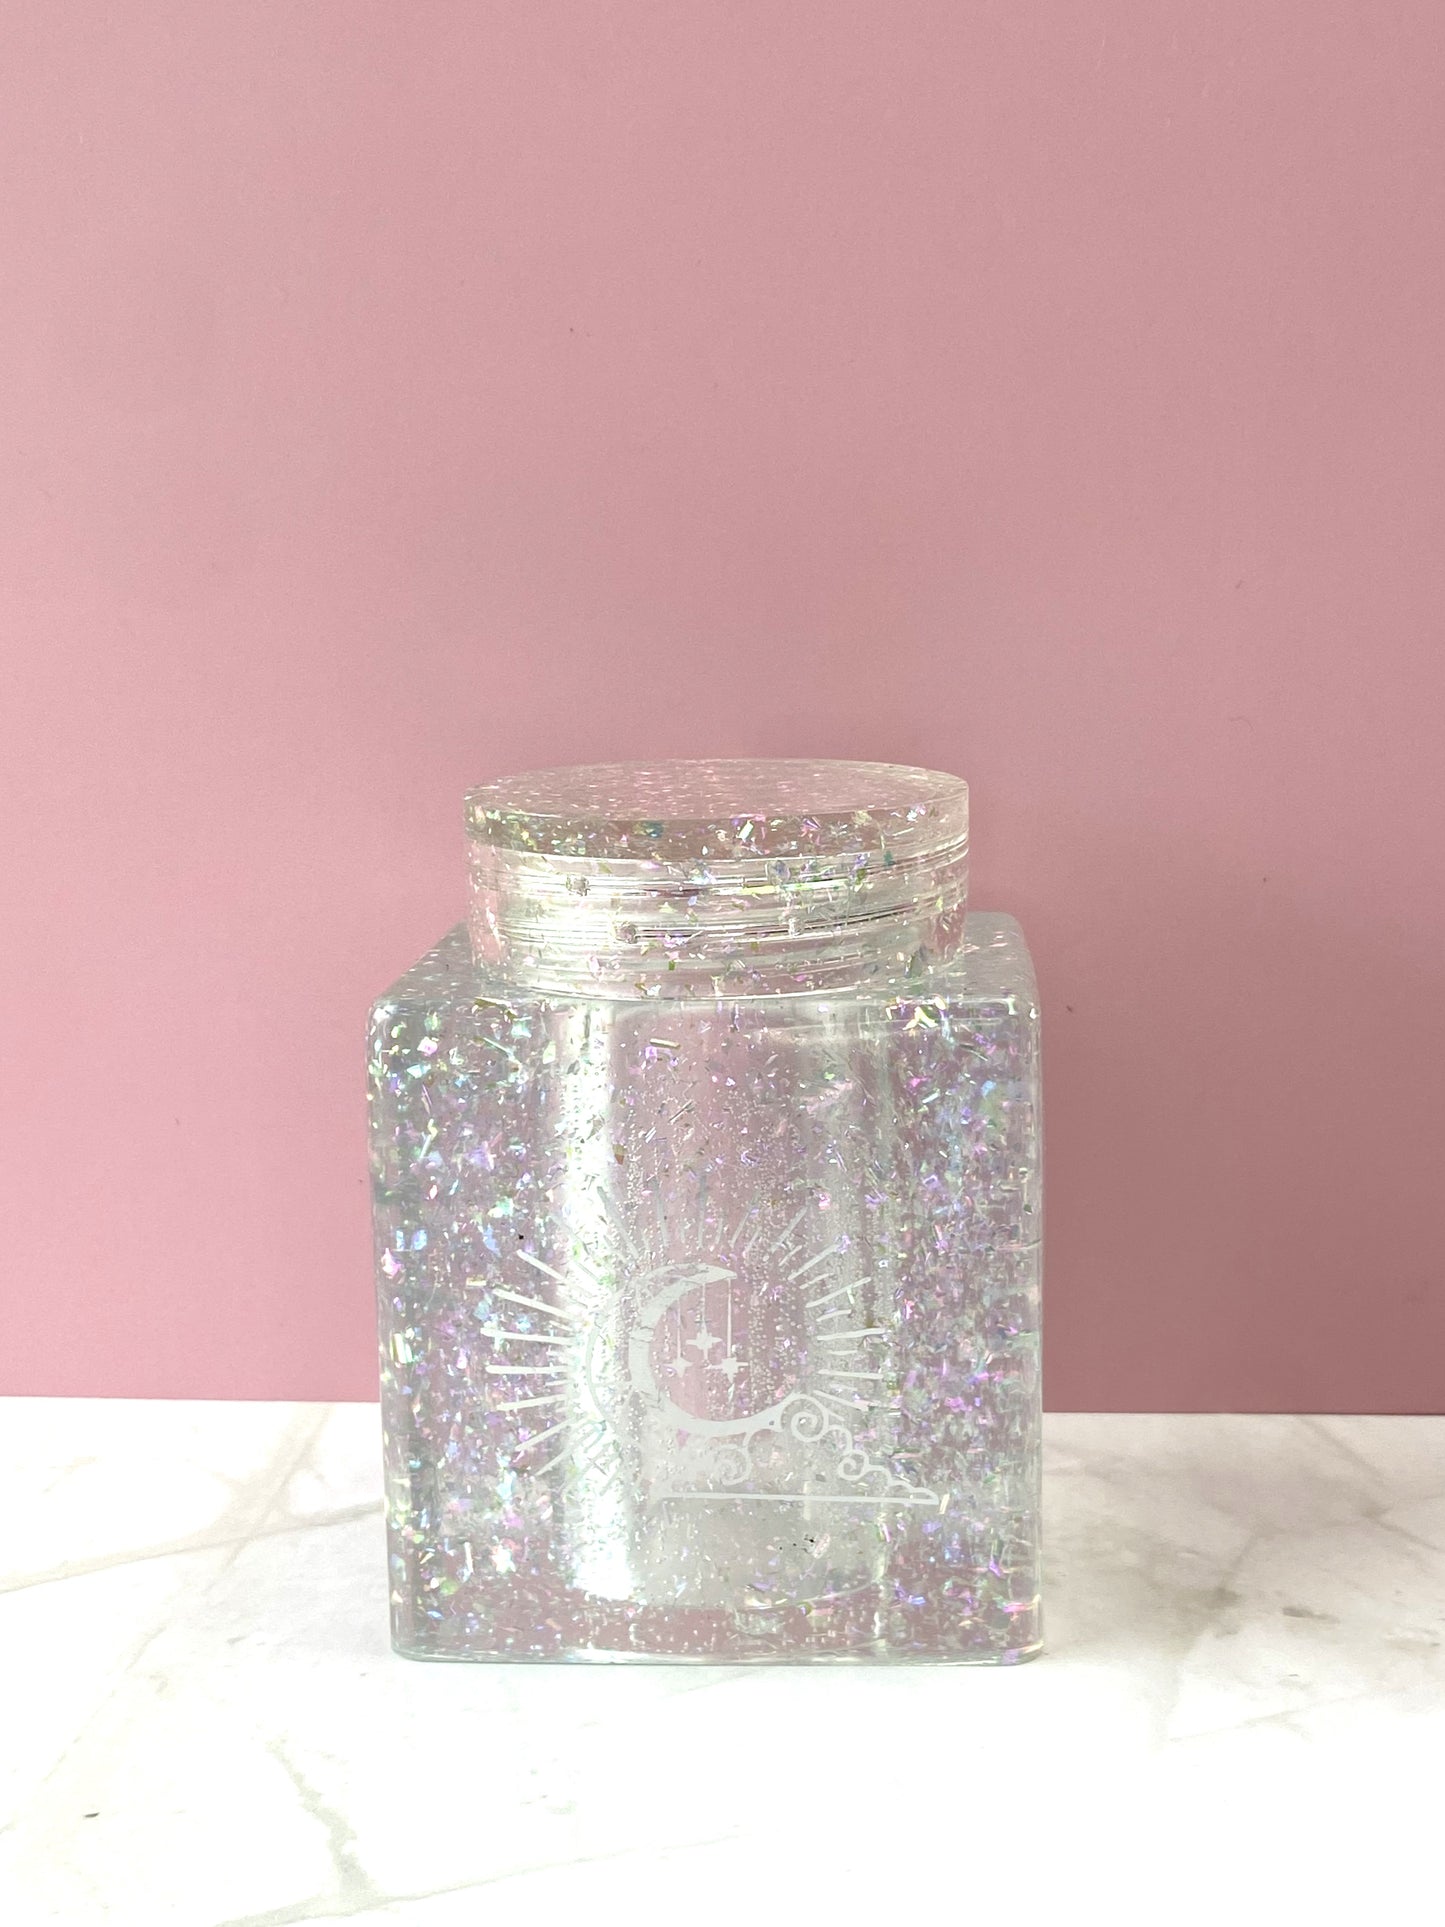 Iridescent Flake Large Rectangle Jar with Moon Decal | Spell Jar | Stash Jar | Handmade Home Decor